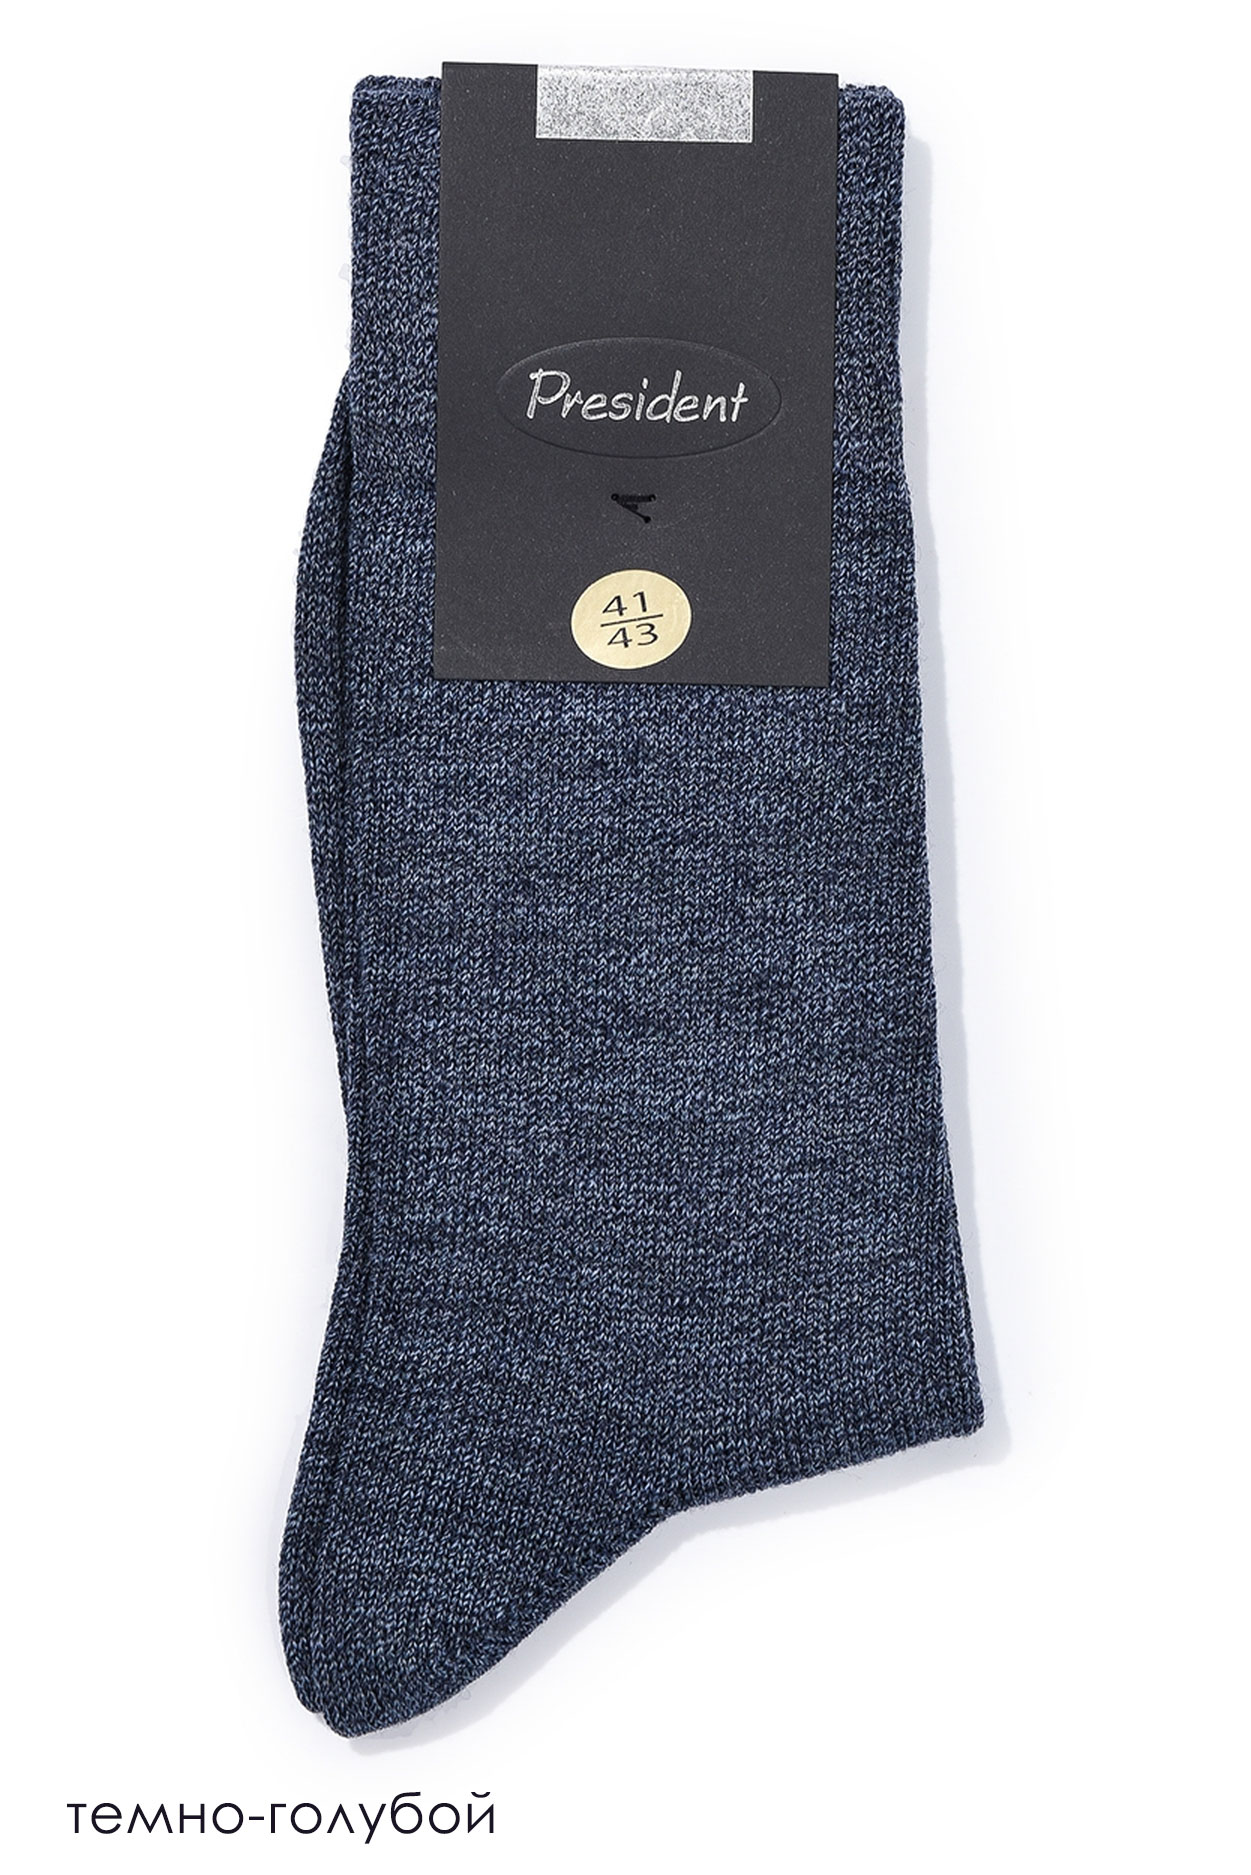 Шерстяные мужские носки 604 President рис. 1